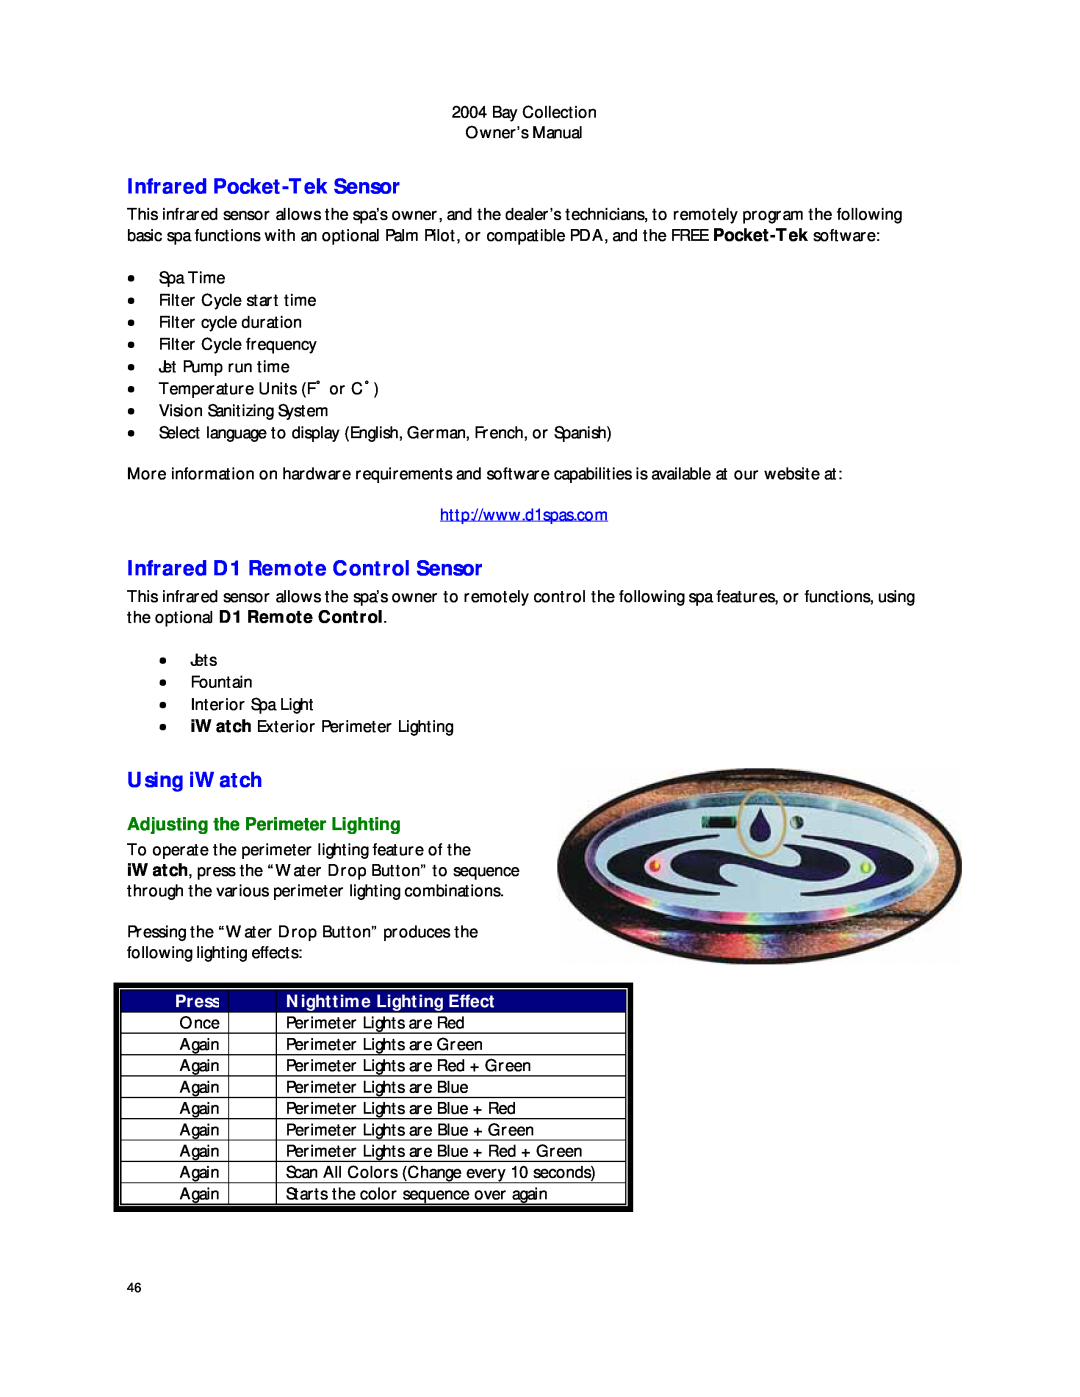 Dimension One Spas Bay Collection manual Infrared Pocket-Tek Sensor, Infrared D1 Remote Control Sensor, Using iWatch, Press 